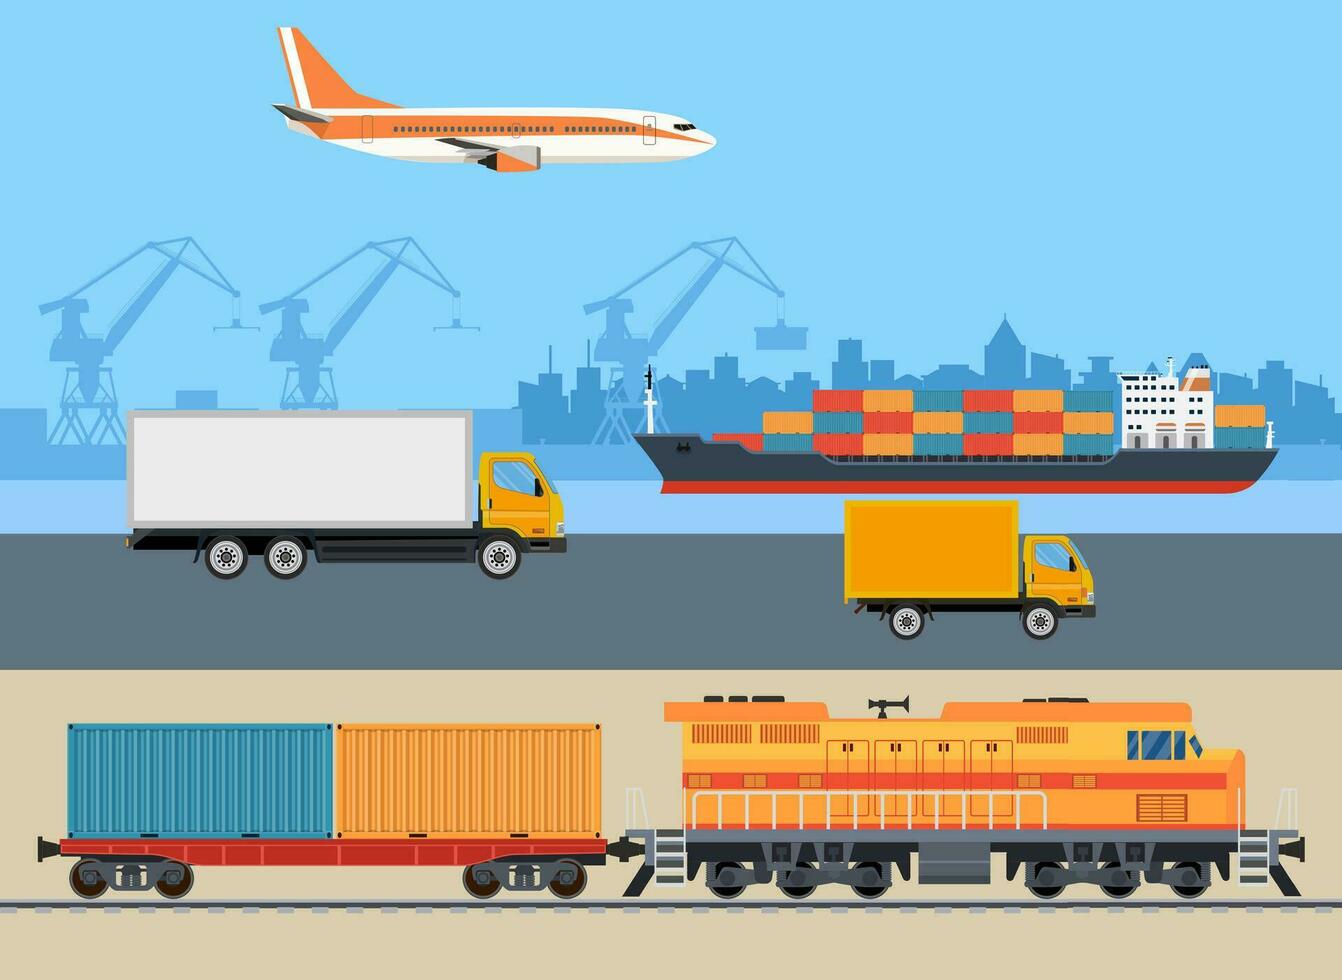 Cargo logistics transportation. Ship, truck, car, train, airplane. import export transport industry. Global freight transportation. Vector illustration in flat style